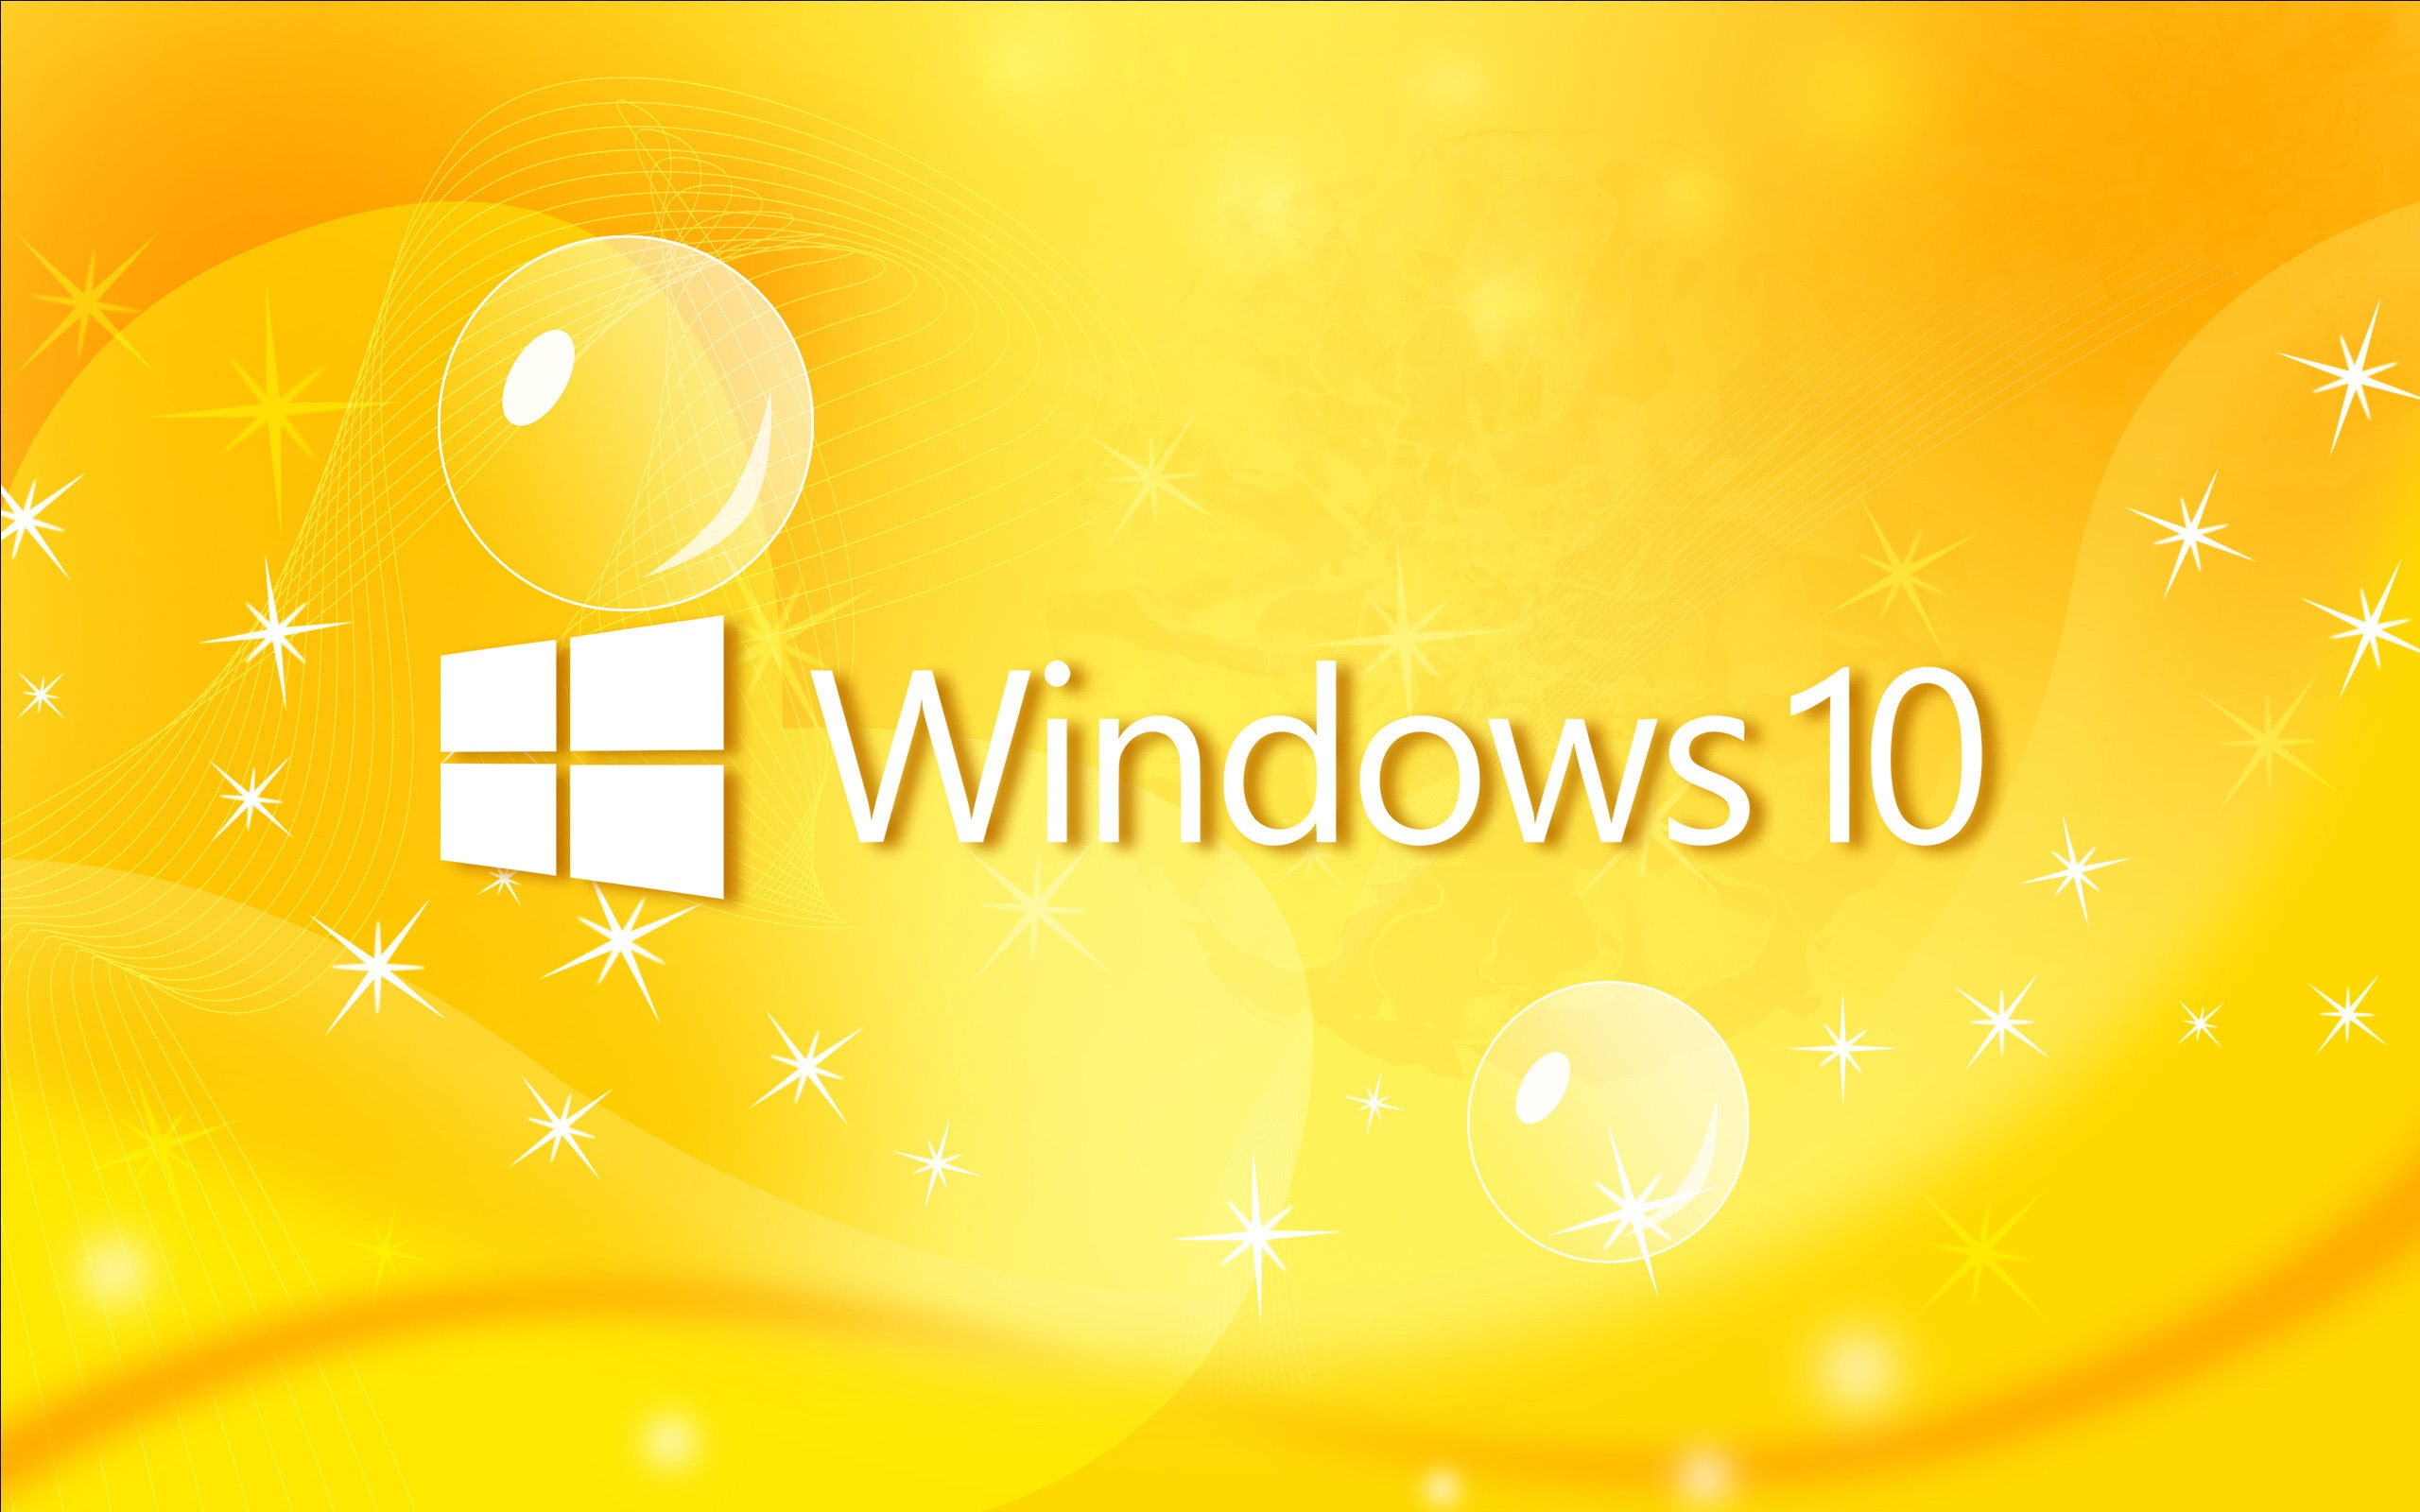 Windows 10 HD Theme Desktop Wallpaper 12, Windows 10 illustration